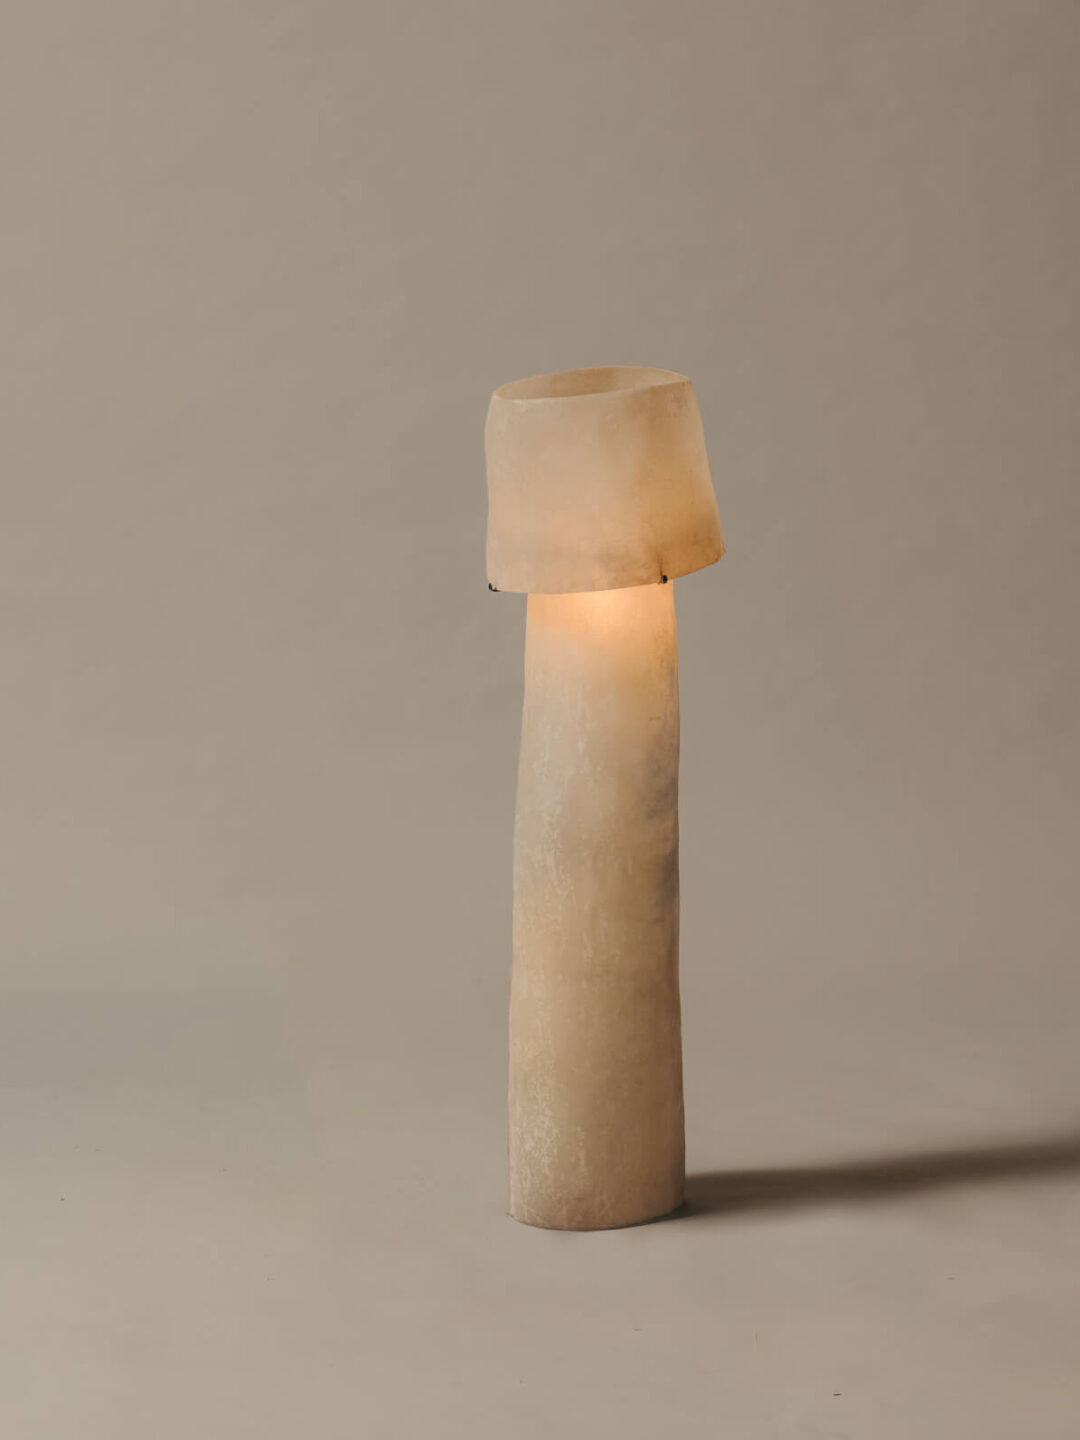 Kilzi lighting | Mush Tower fiberglass lamp, a elegant designer lamp with soft organic shapes resembling a growing mushroom. Perfect for home decor.